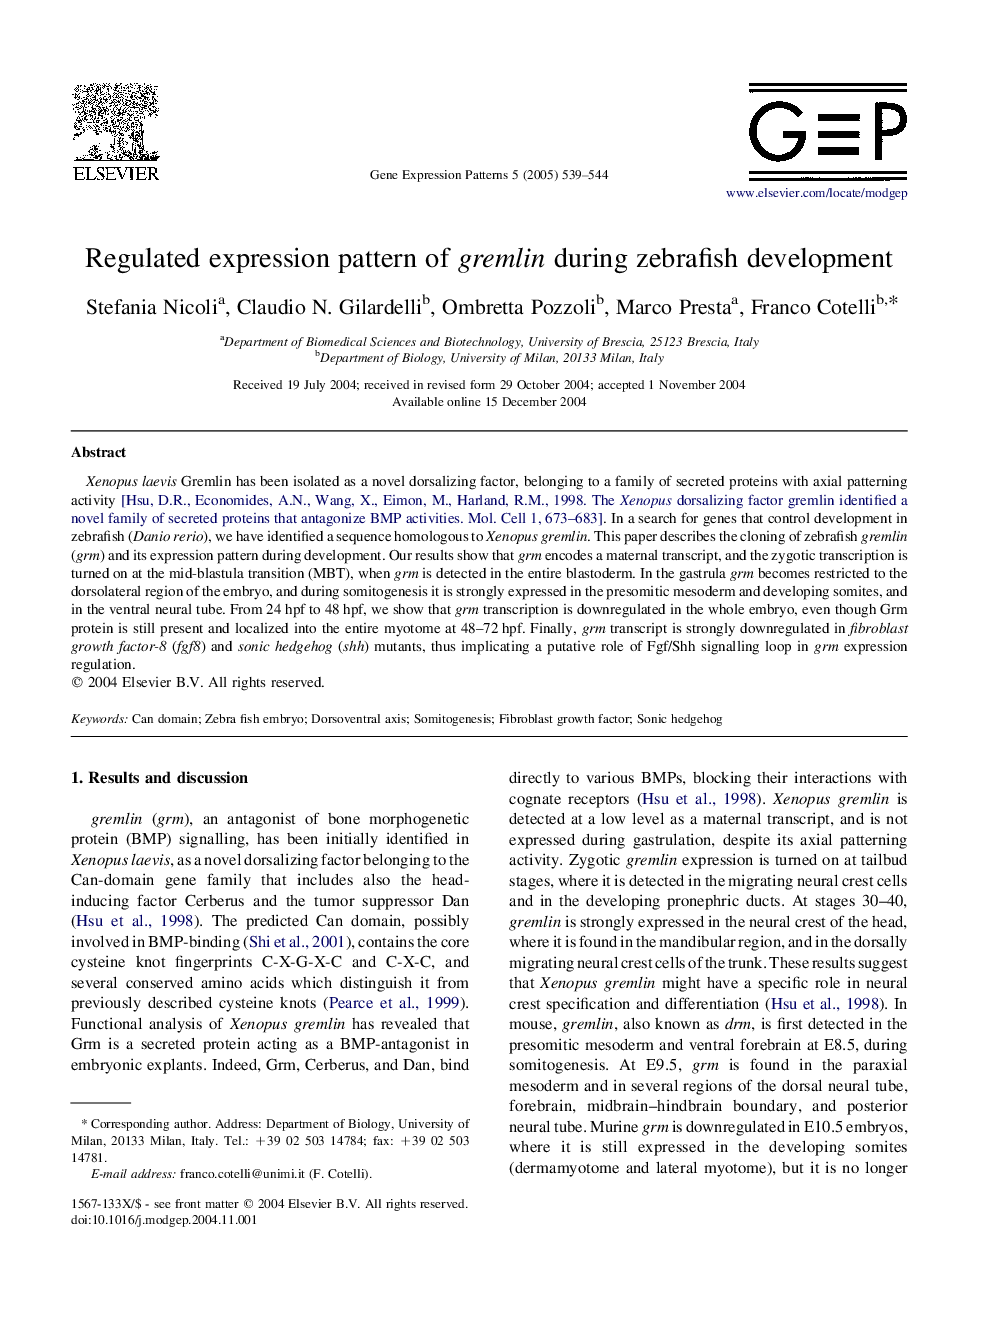 Regulated expression pattern of gremlin during zebrafish development